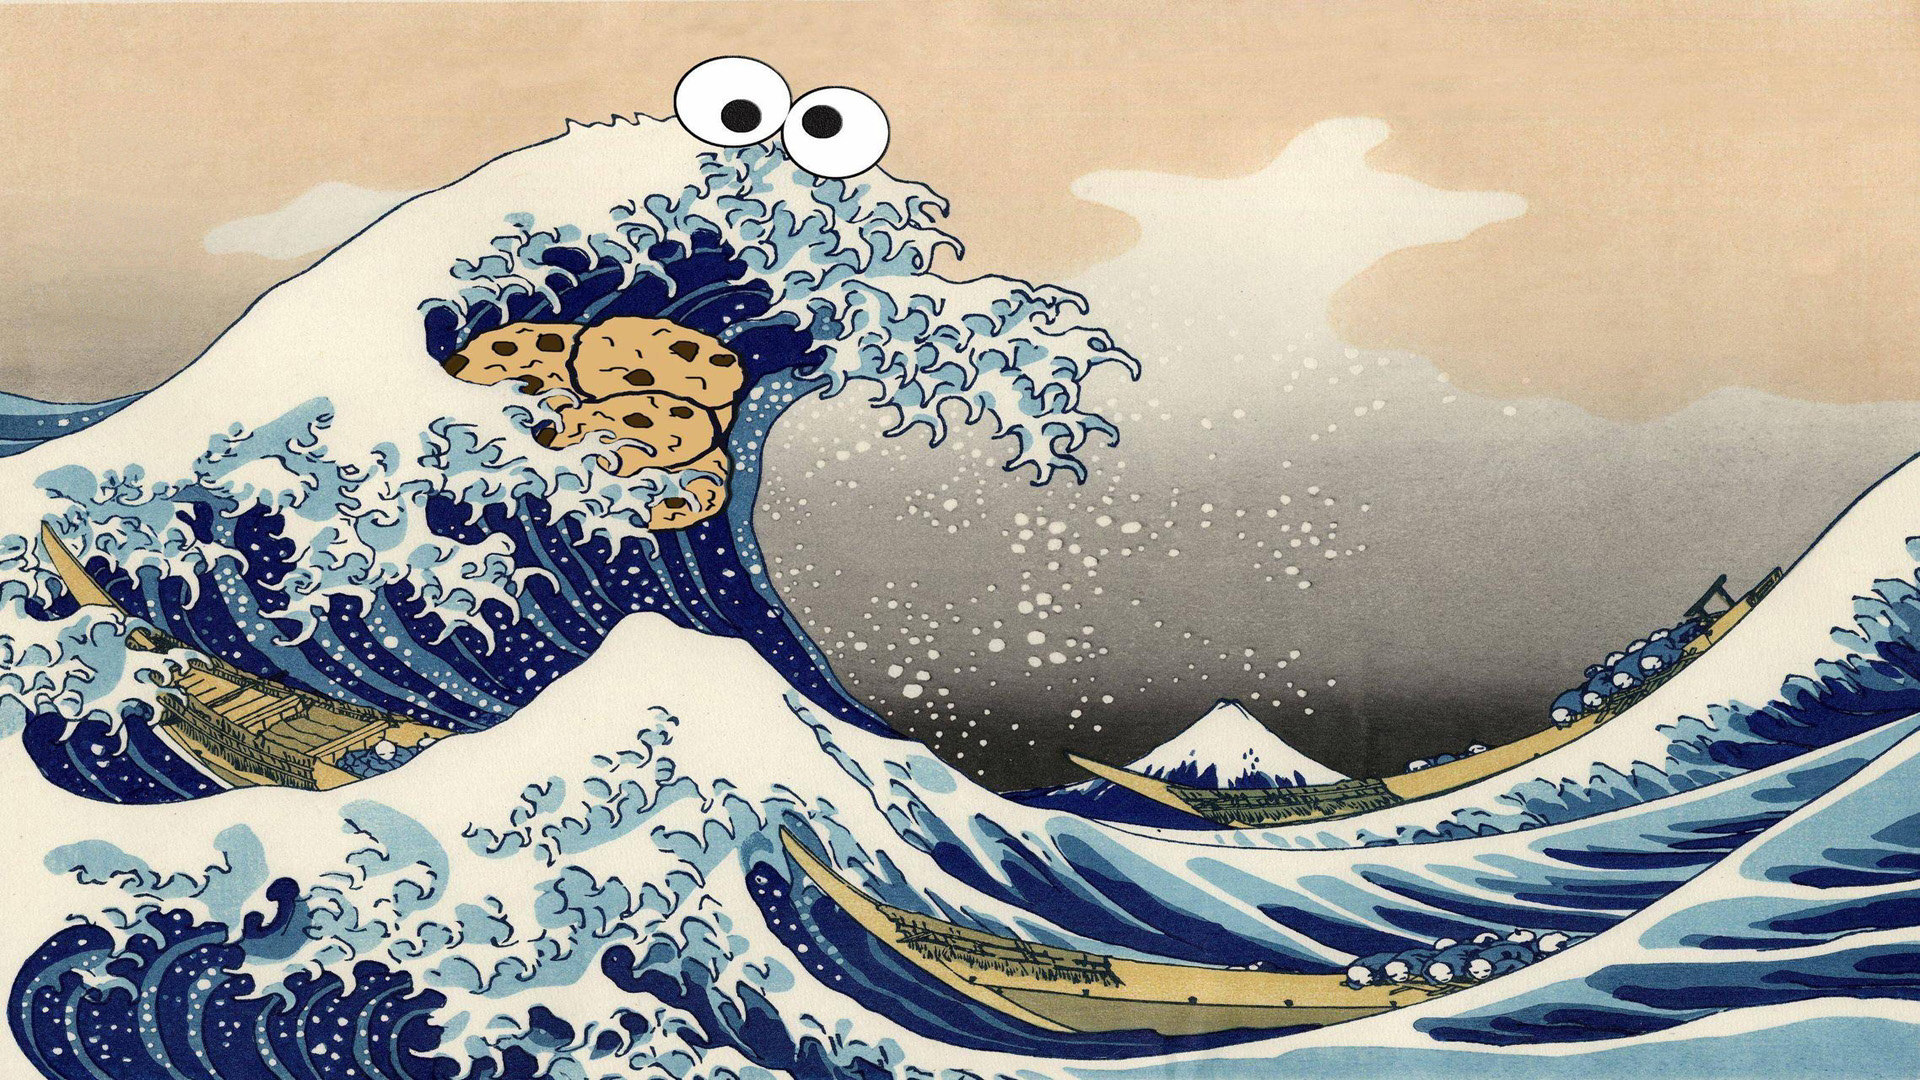 Cookie Monster Wave HD Wallpaper 1920x1080 ID48851